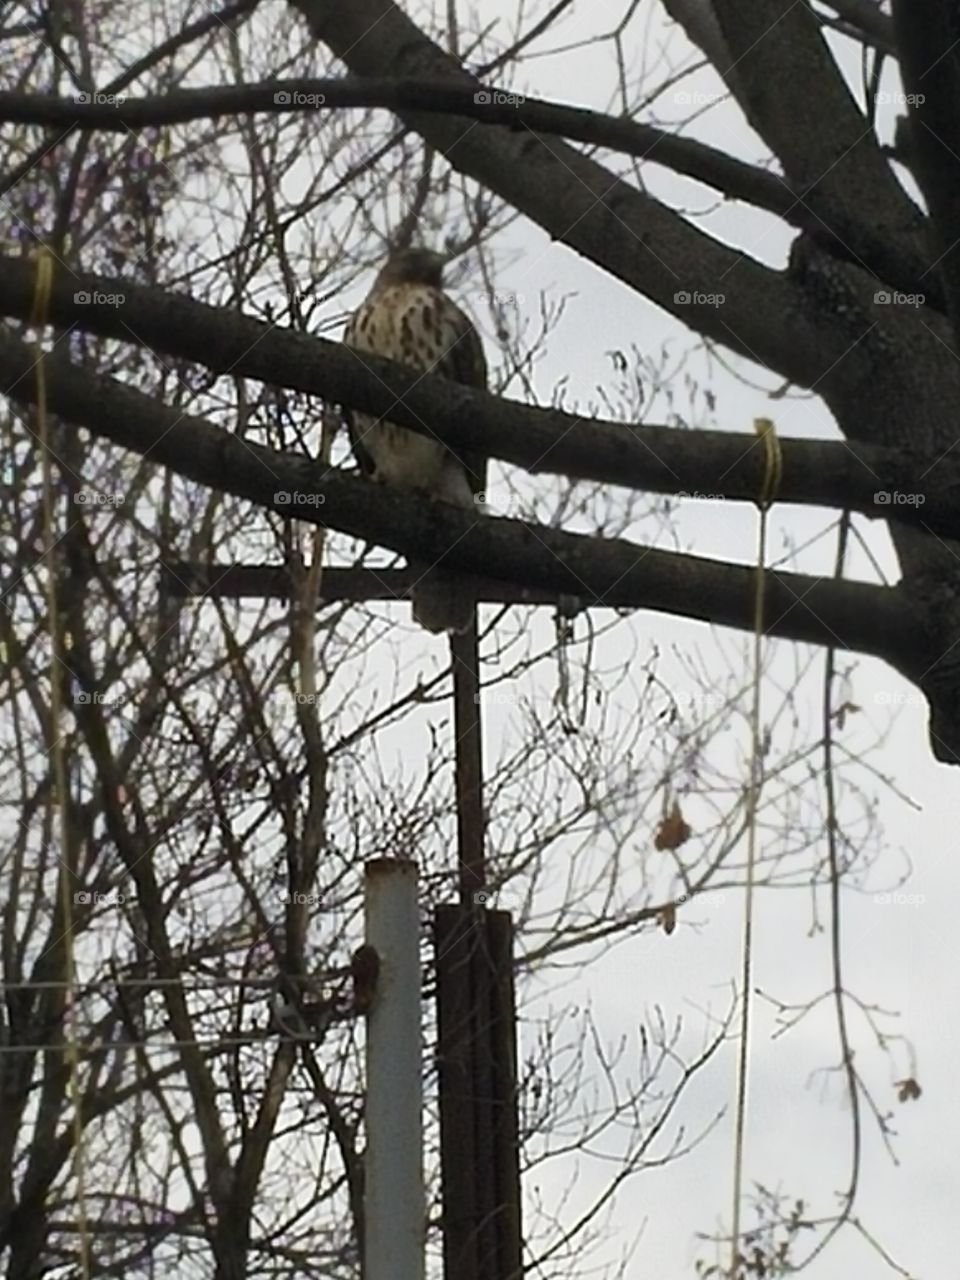 Hawk in my backyard